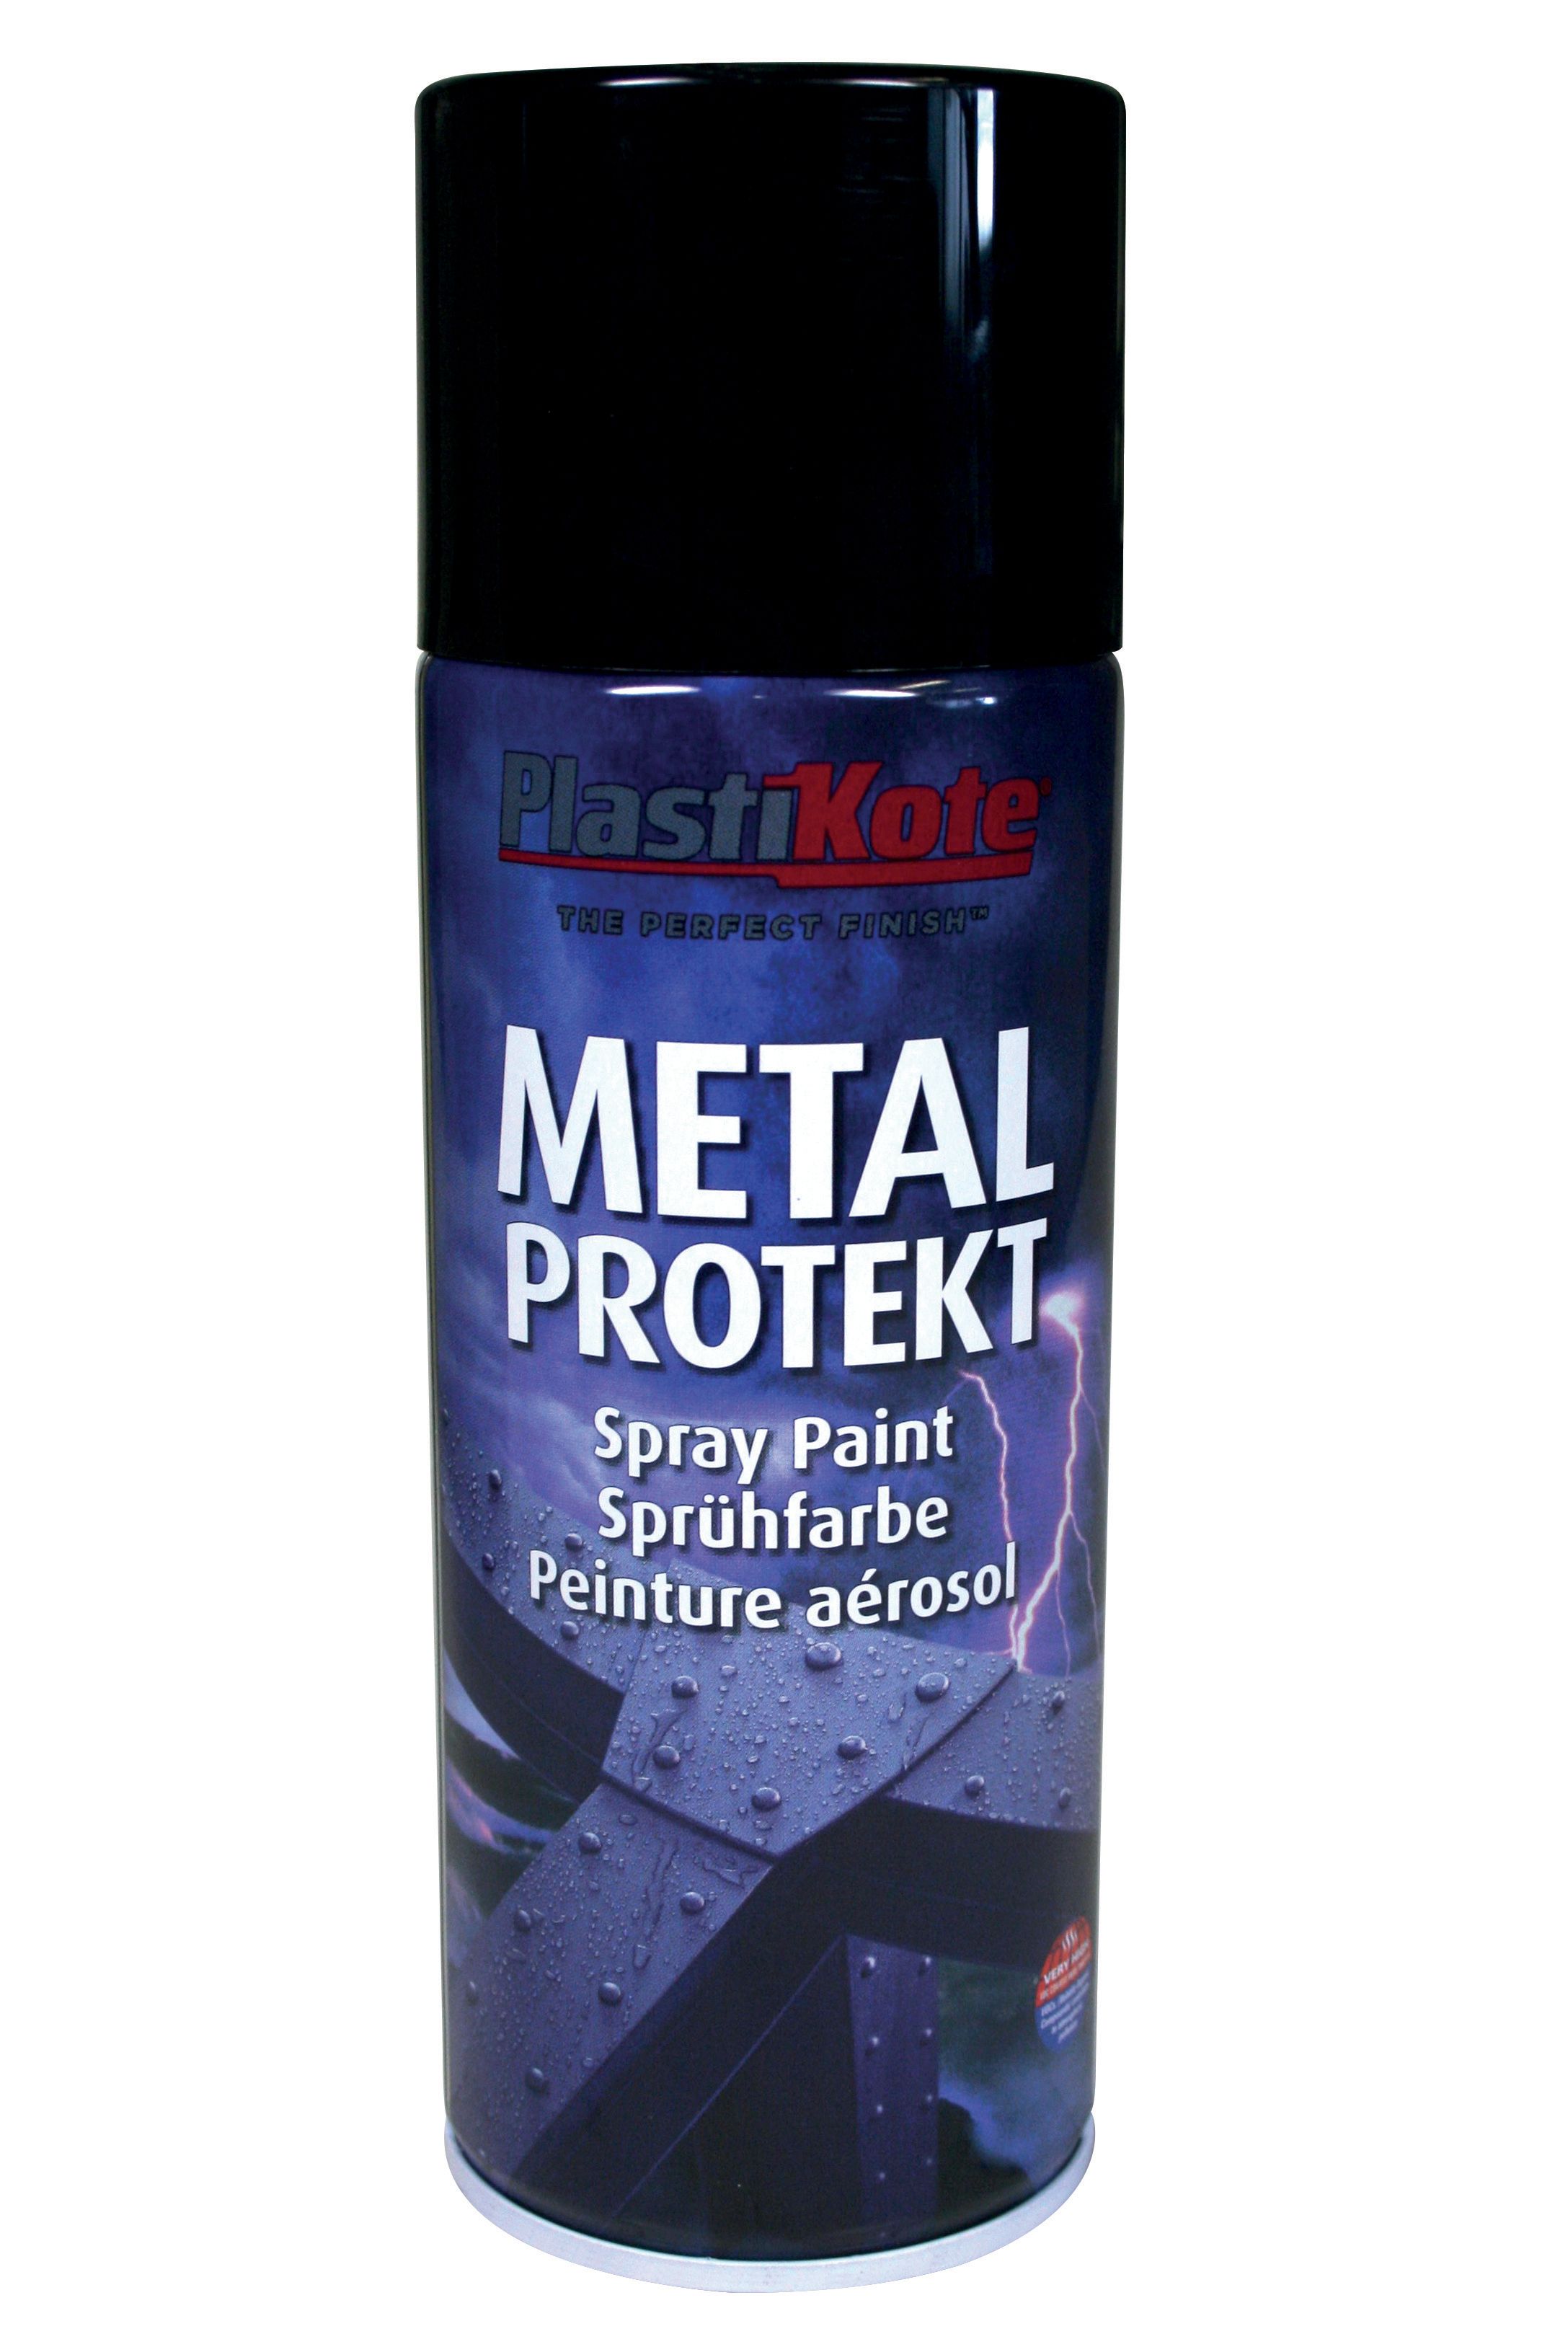 Plastikote Metal Protekt - Gloss Black - 400ml